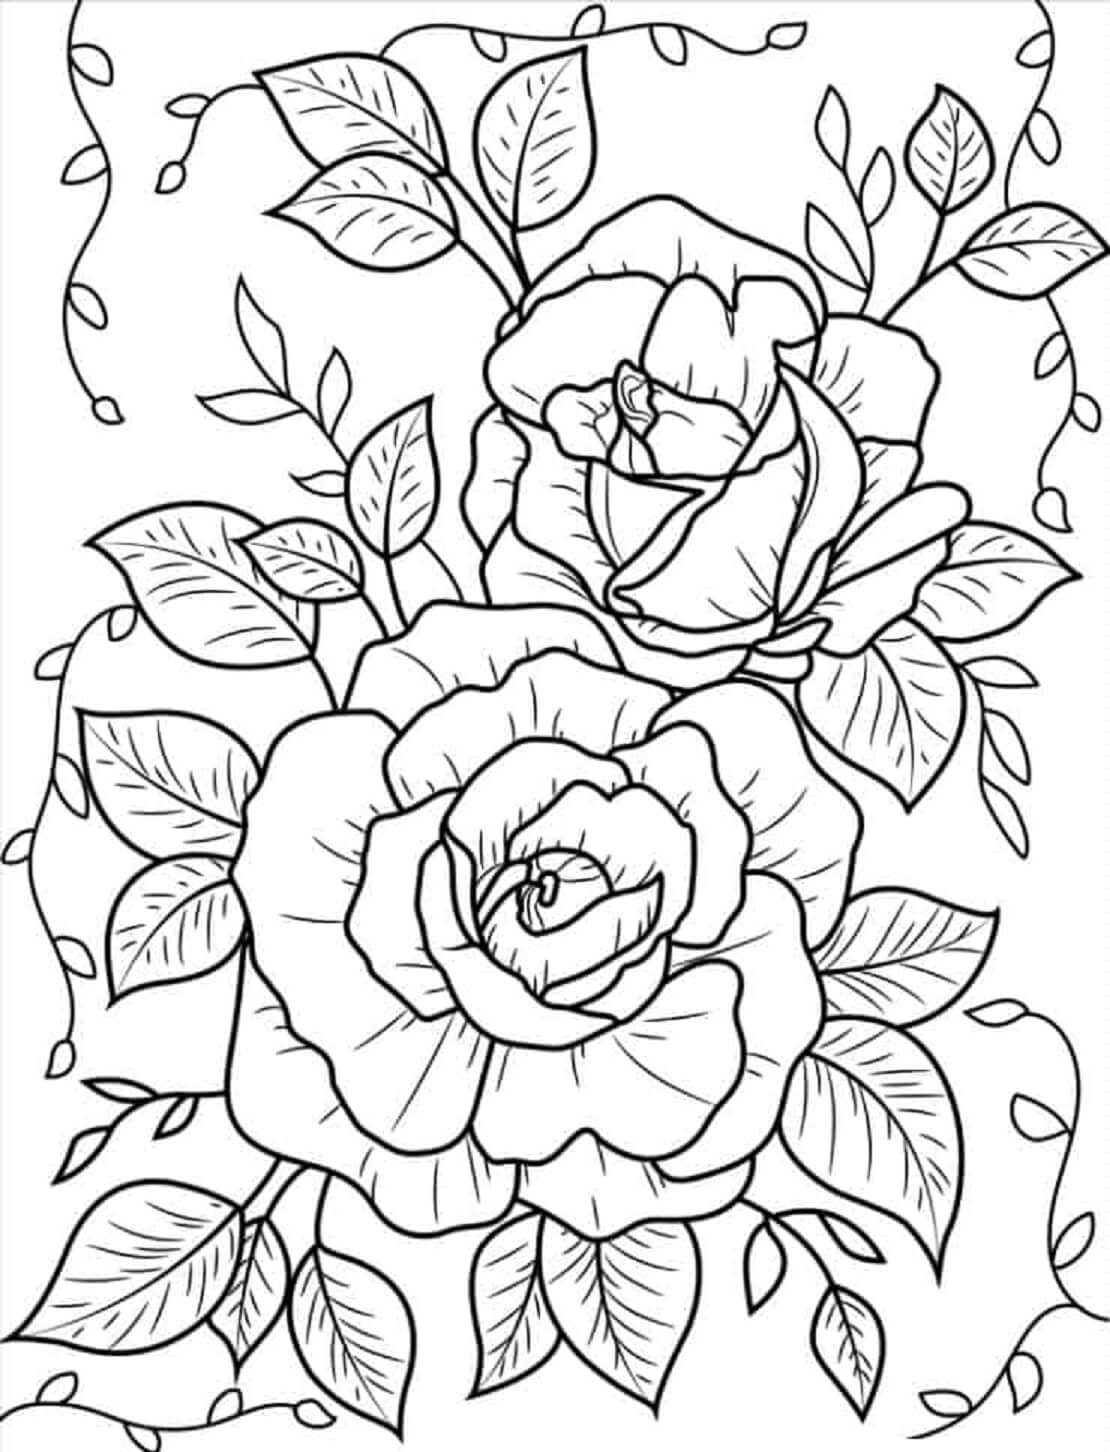 Mandala Roses With Leaves Coloring Page Mandalas